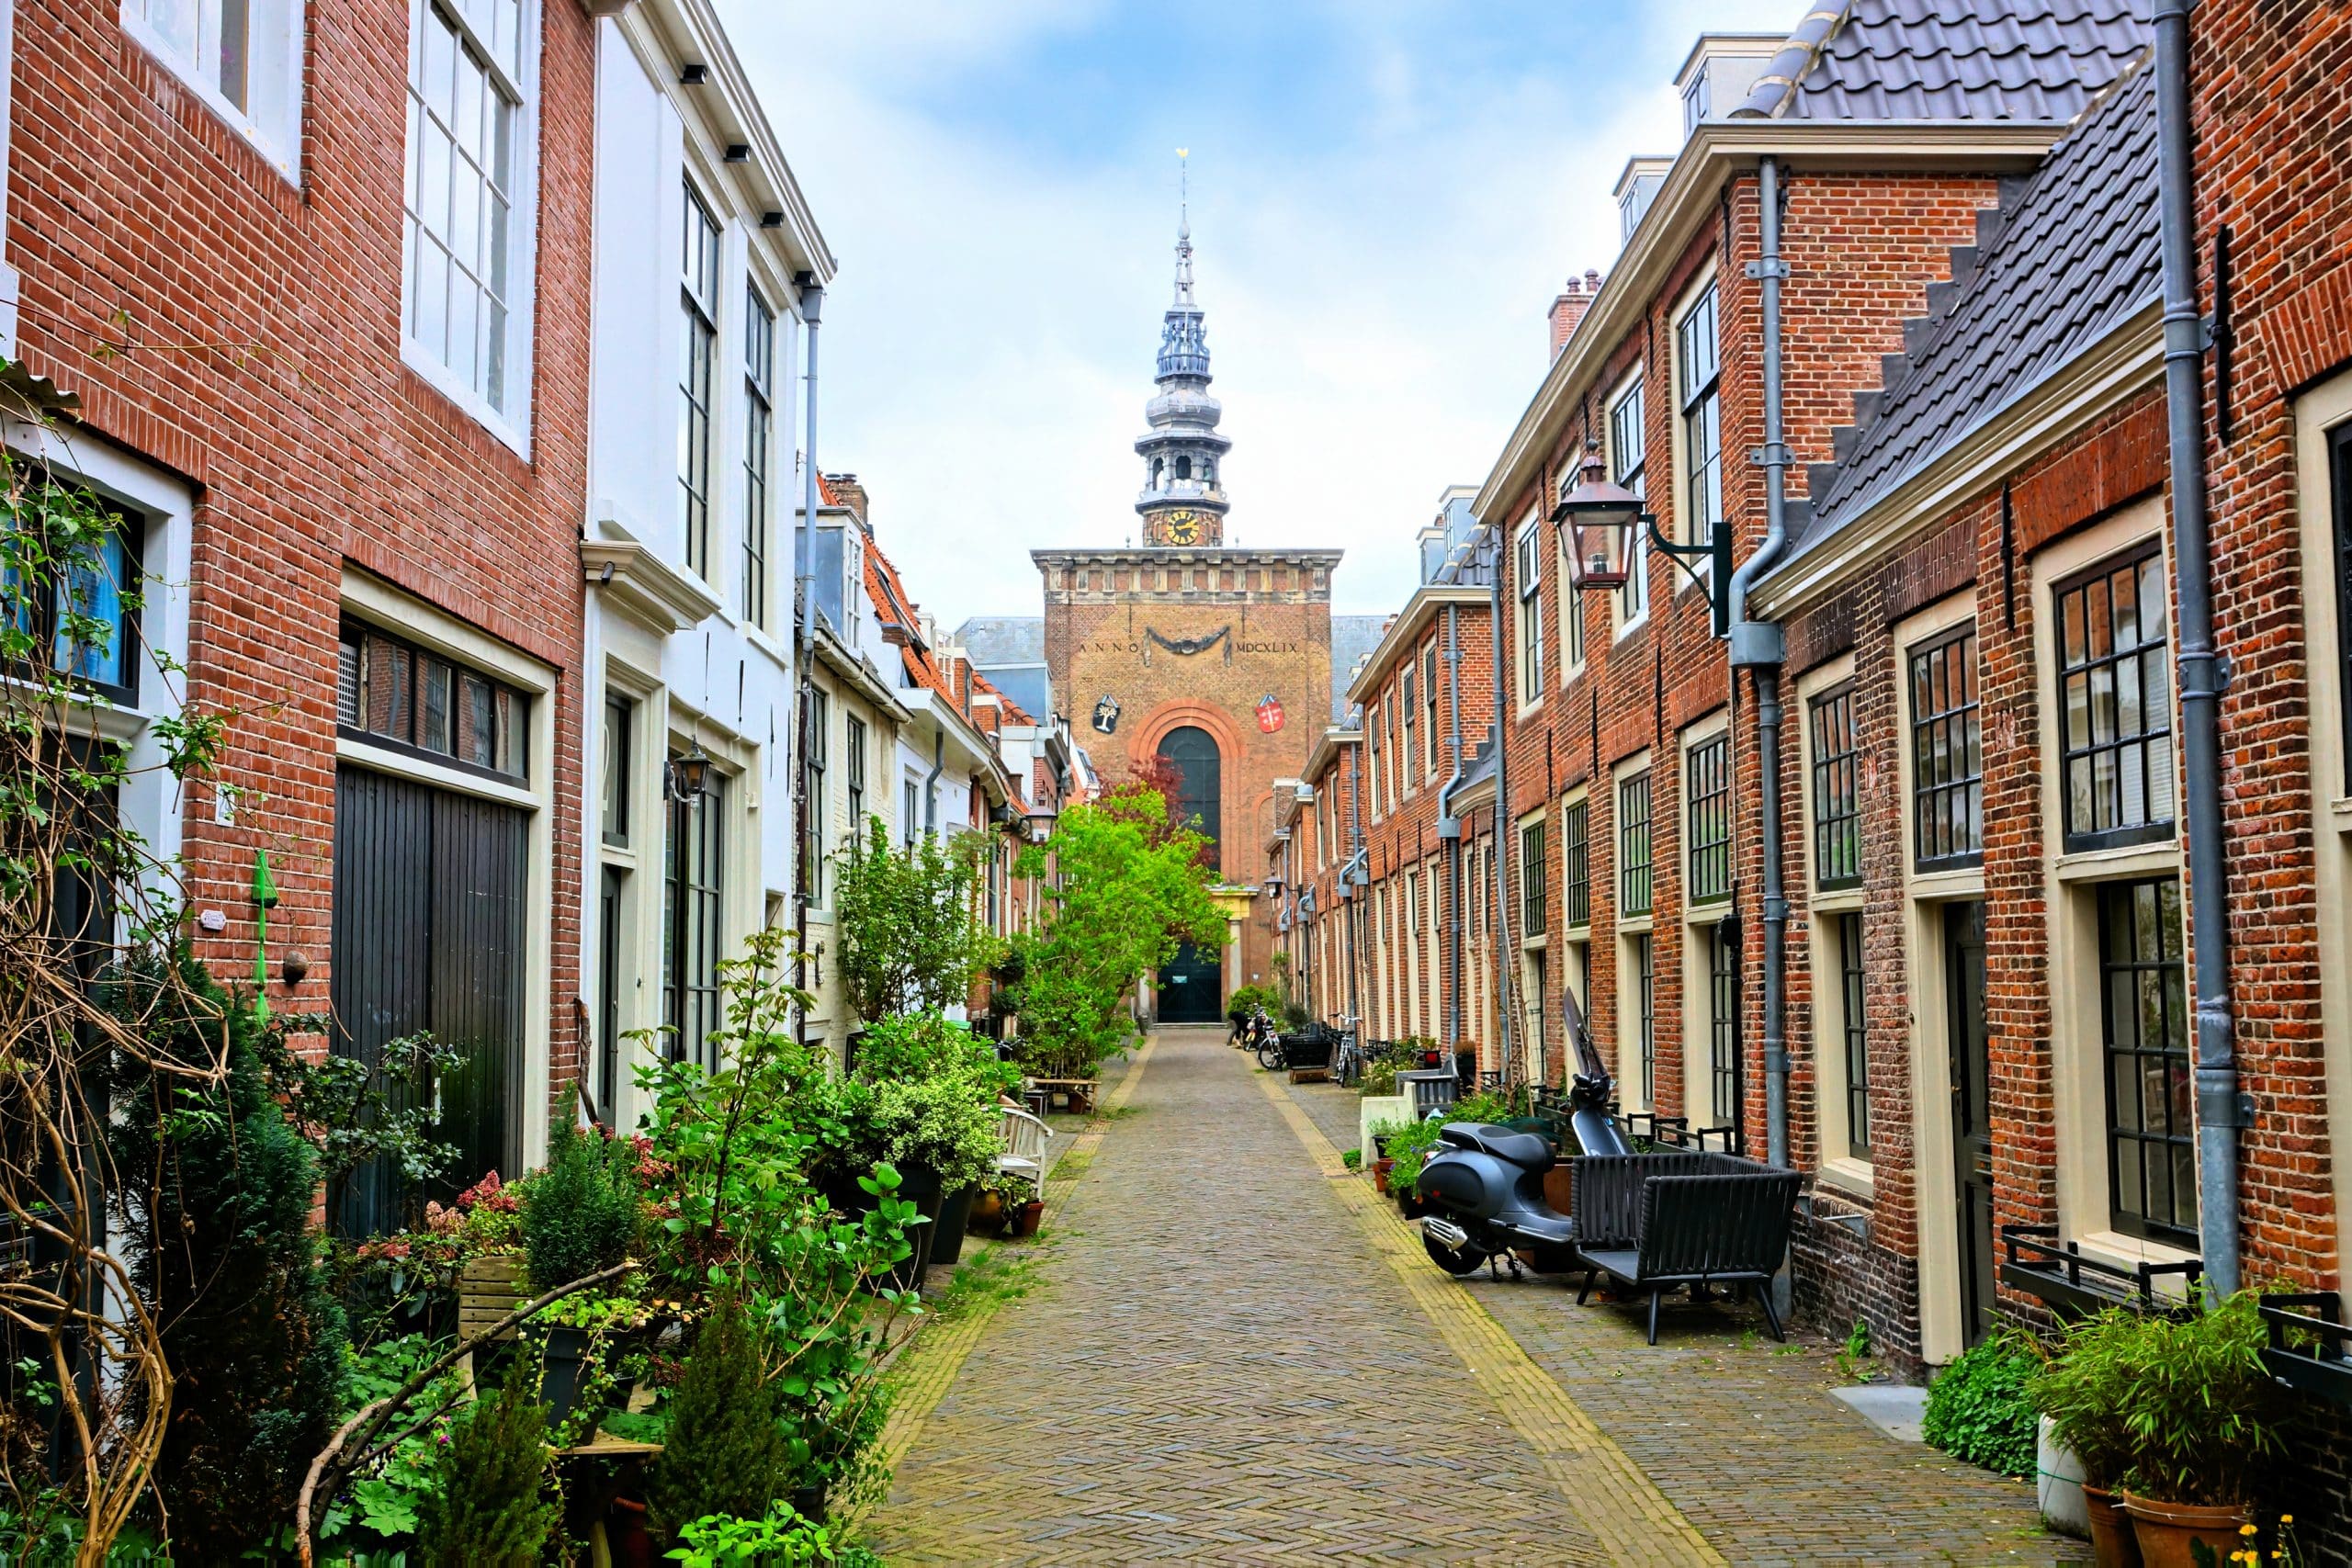 Leafy Dutch street with church tower in background, Haarlem, Netherlands